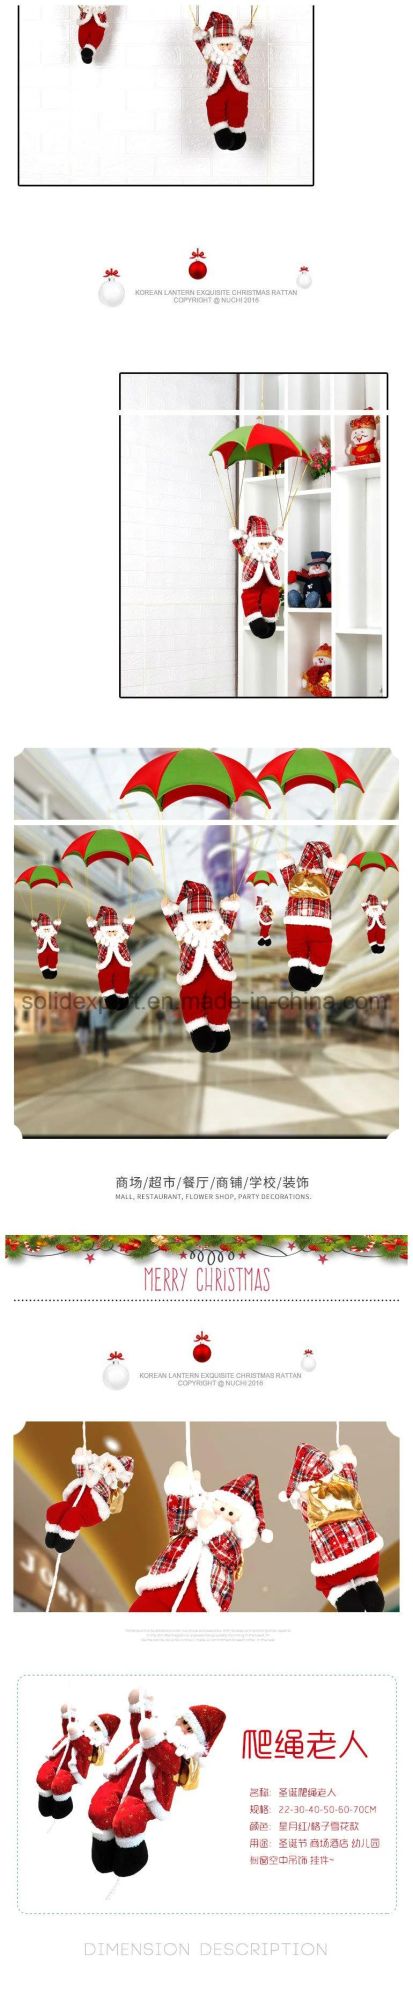 Father Christmas Skydiving Christmas Decoration for Shopping Mall Home Kindergarten